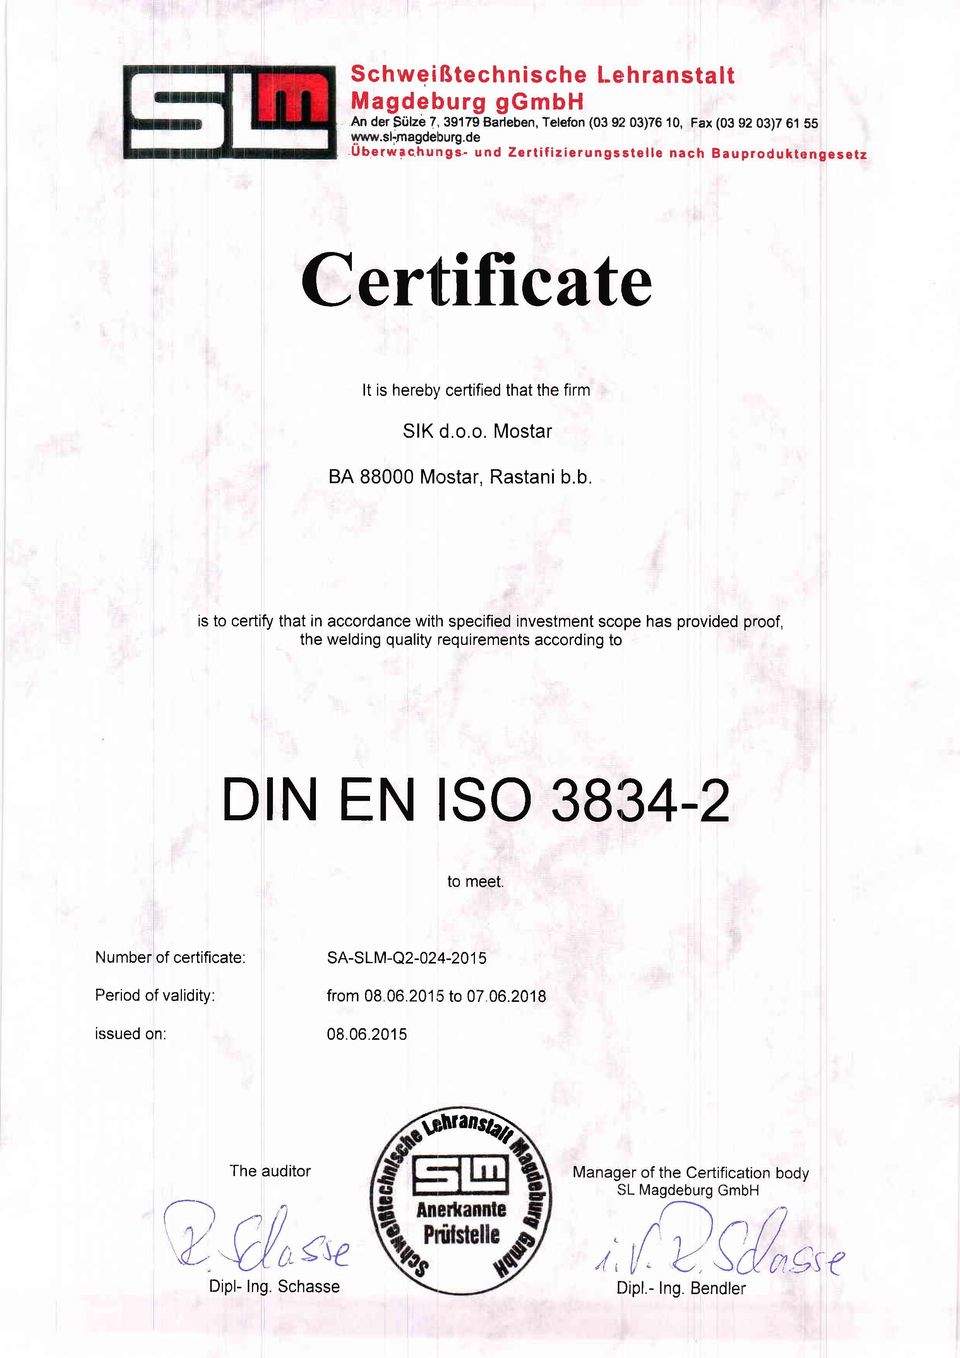 'certified that the firm SIK d.o.o. Mostar BA 88000 Mrcstar, Rastani b.